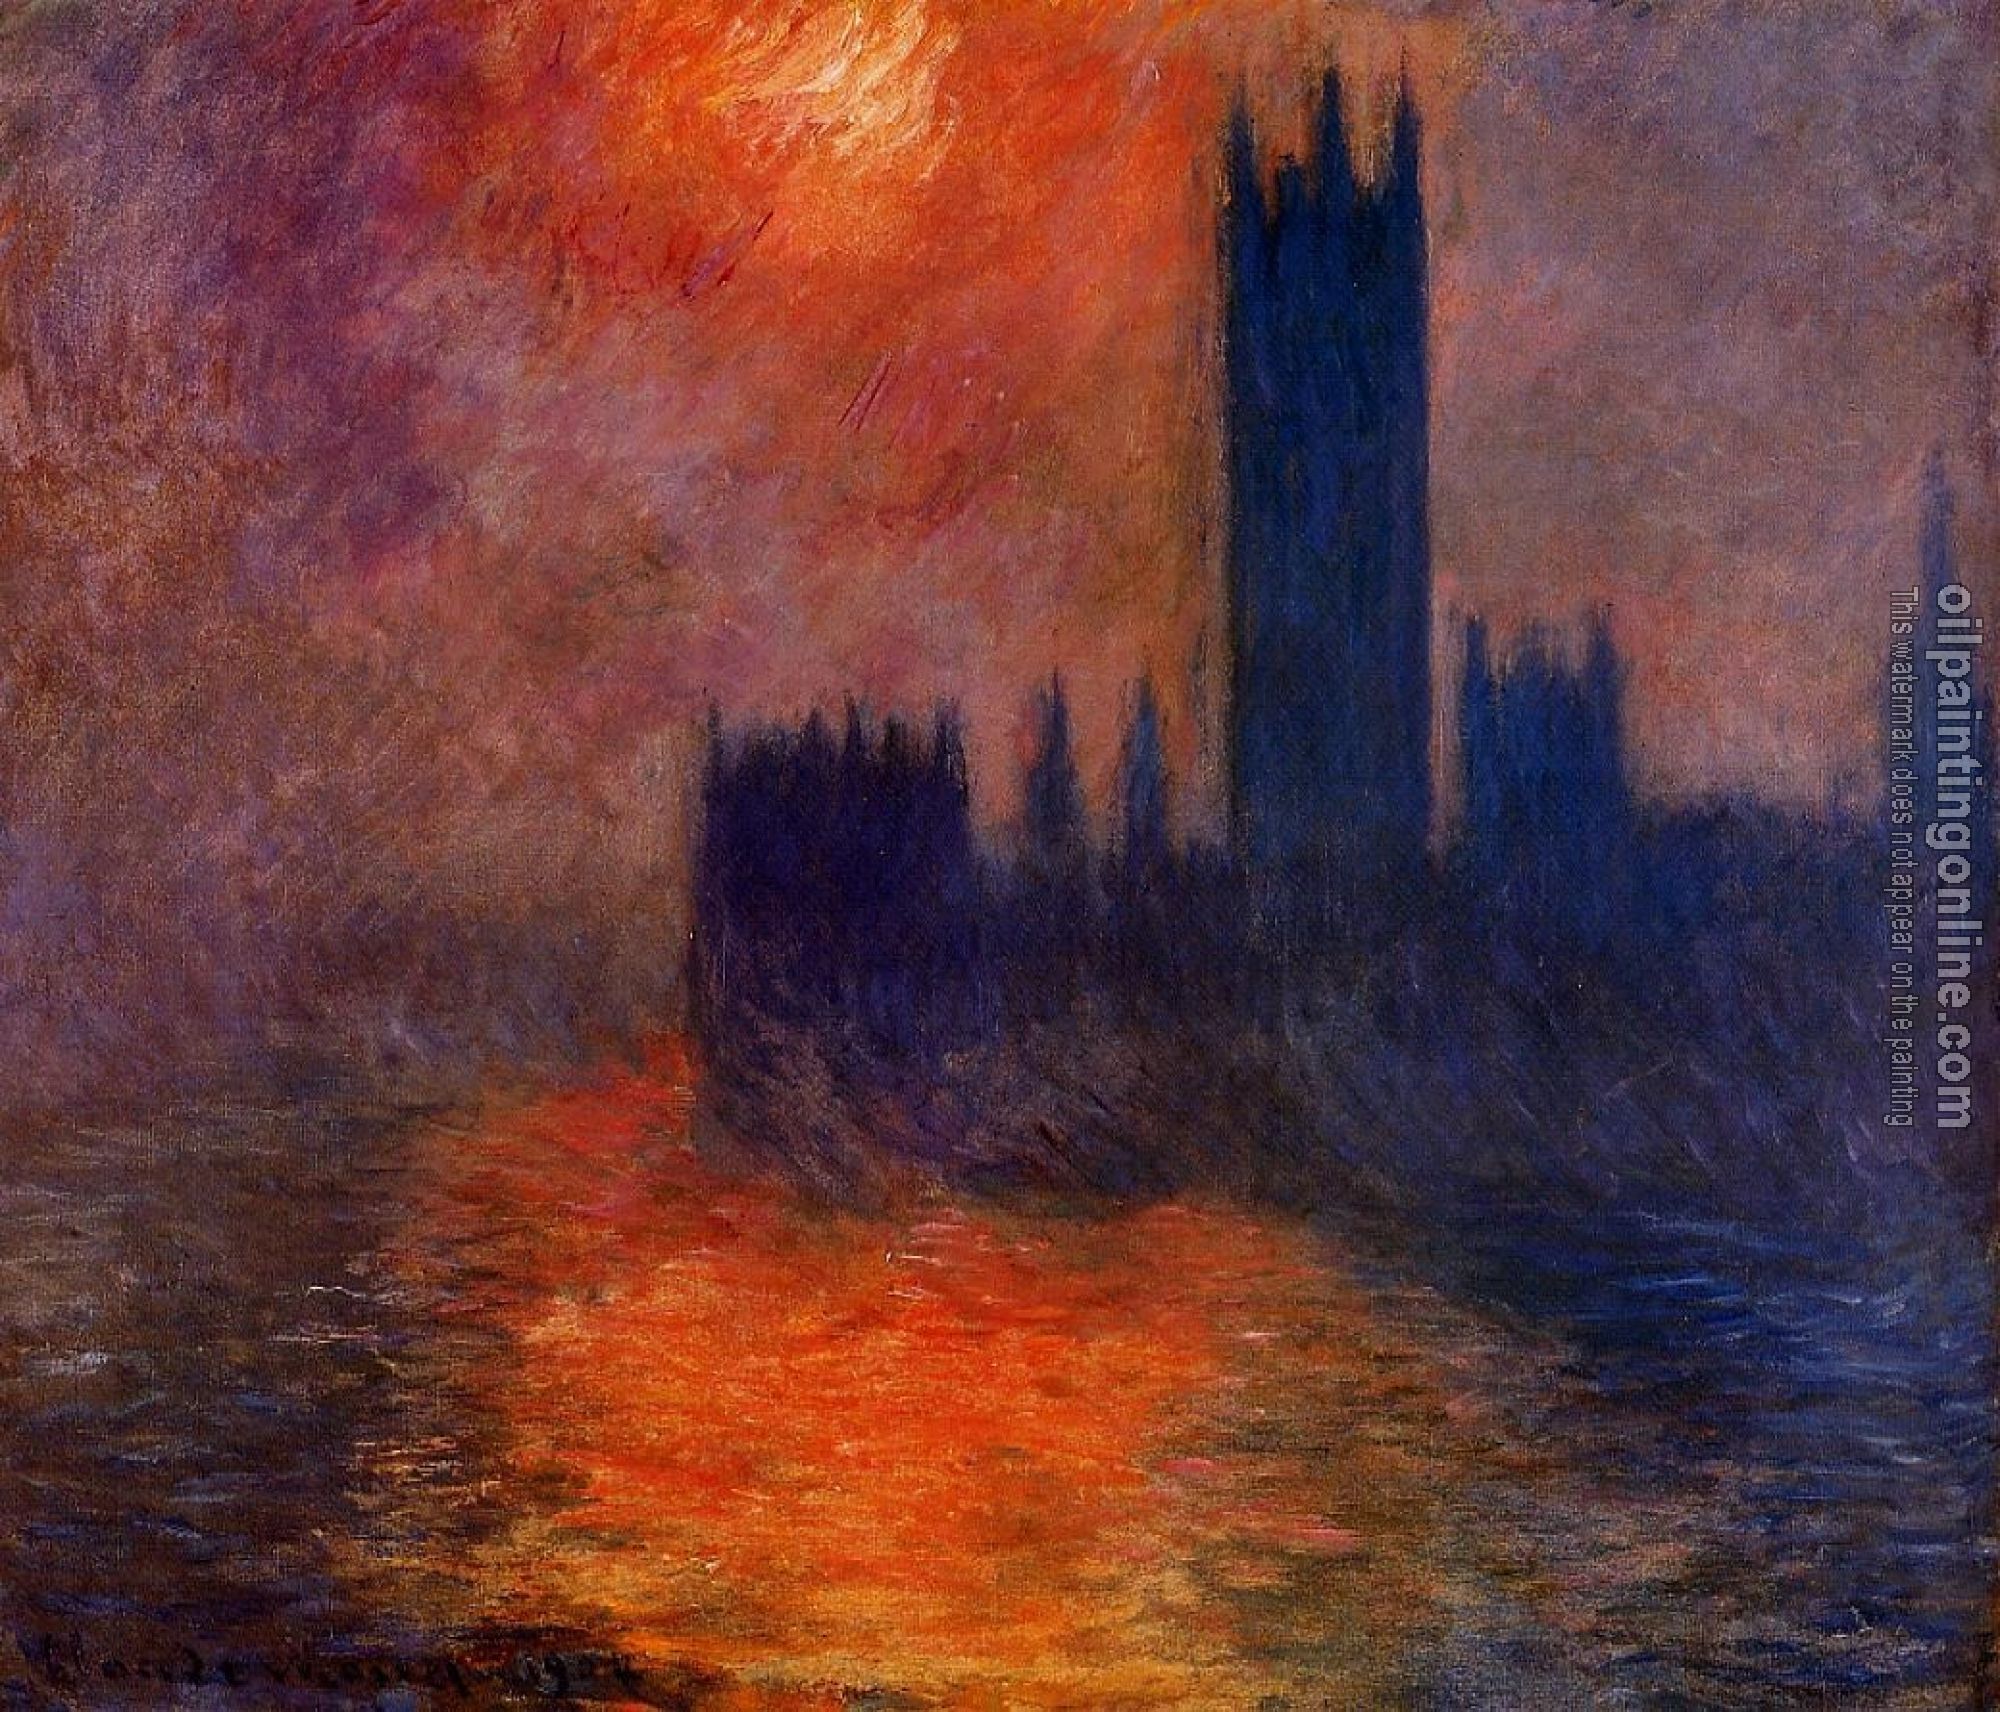 Monet, Claude Oscar - Houses of Parliament, Sunset